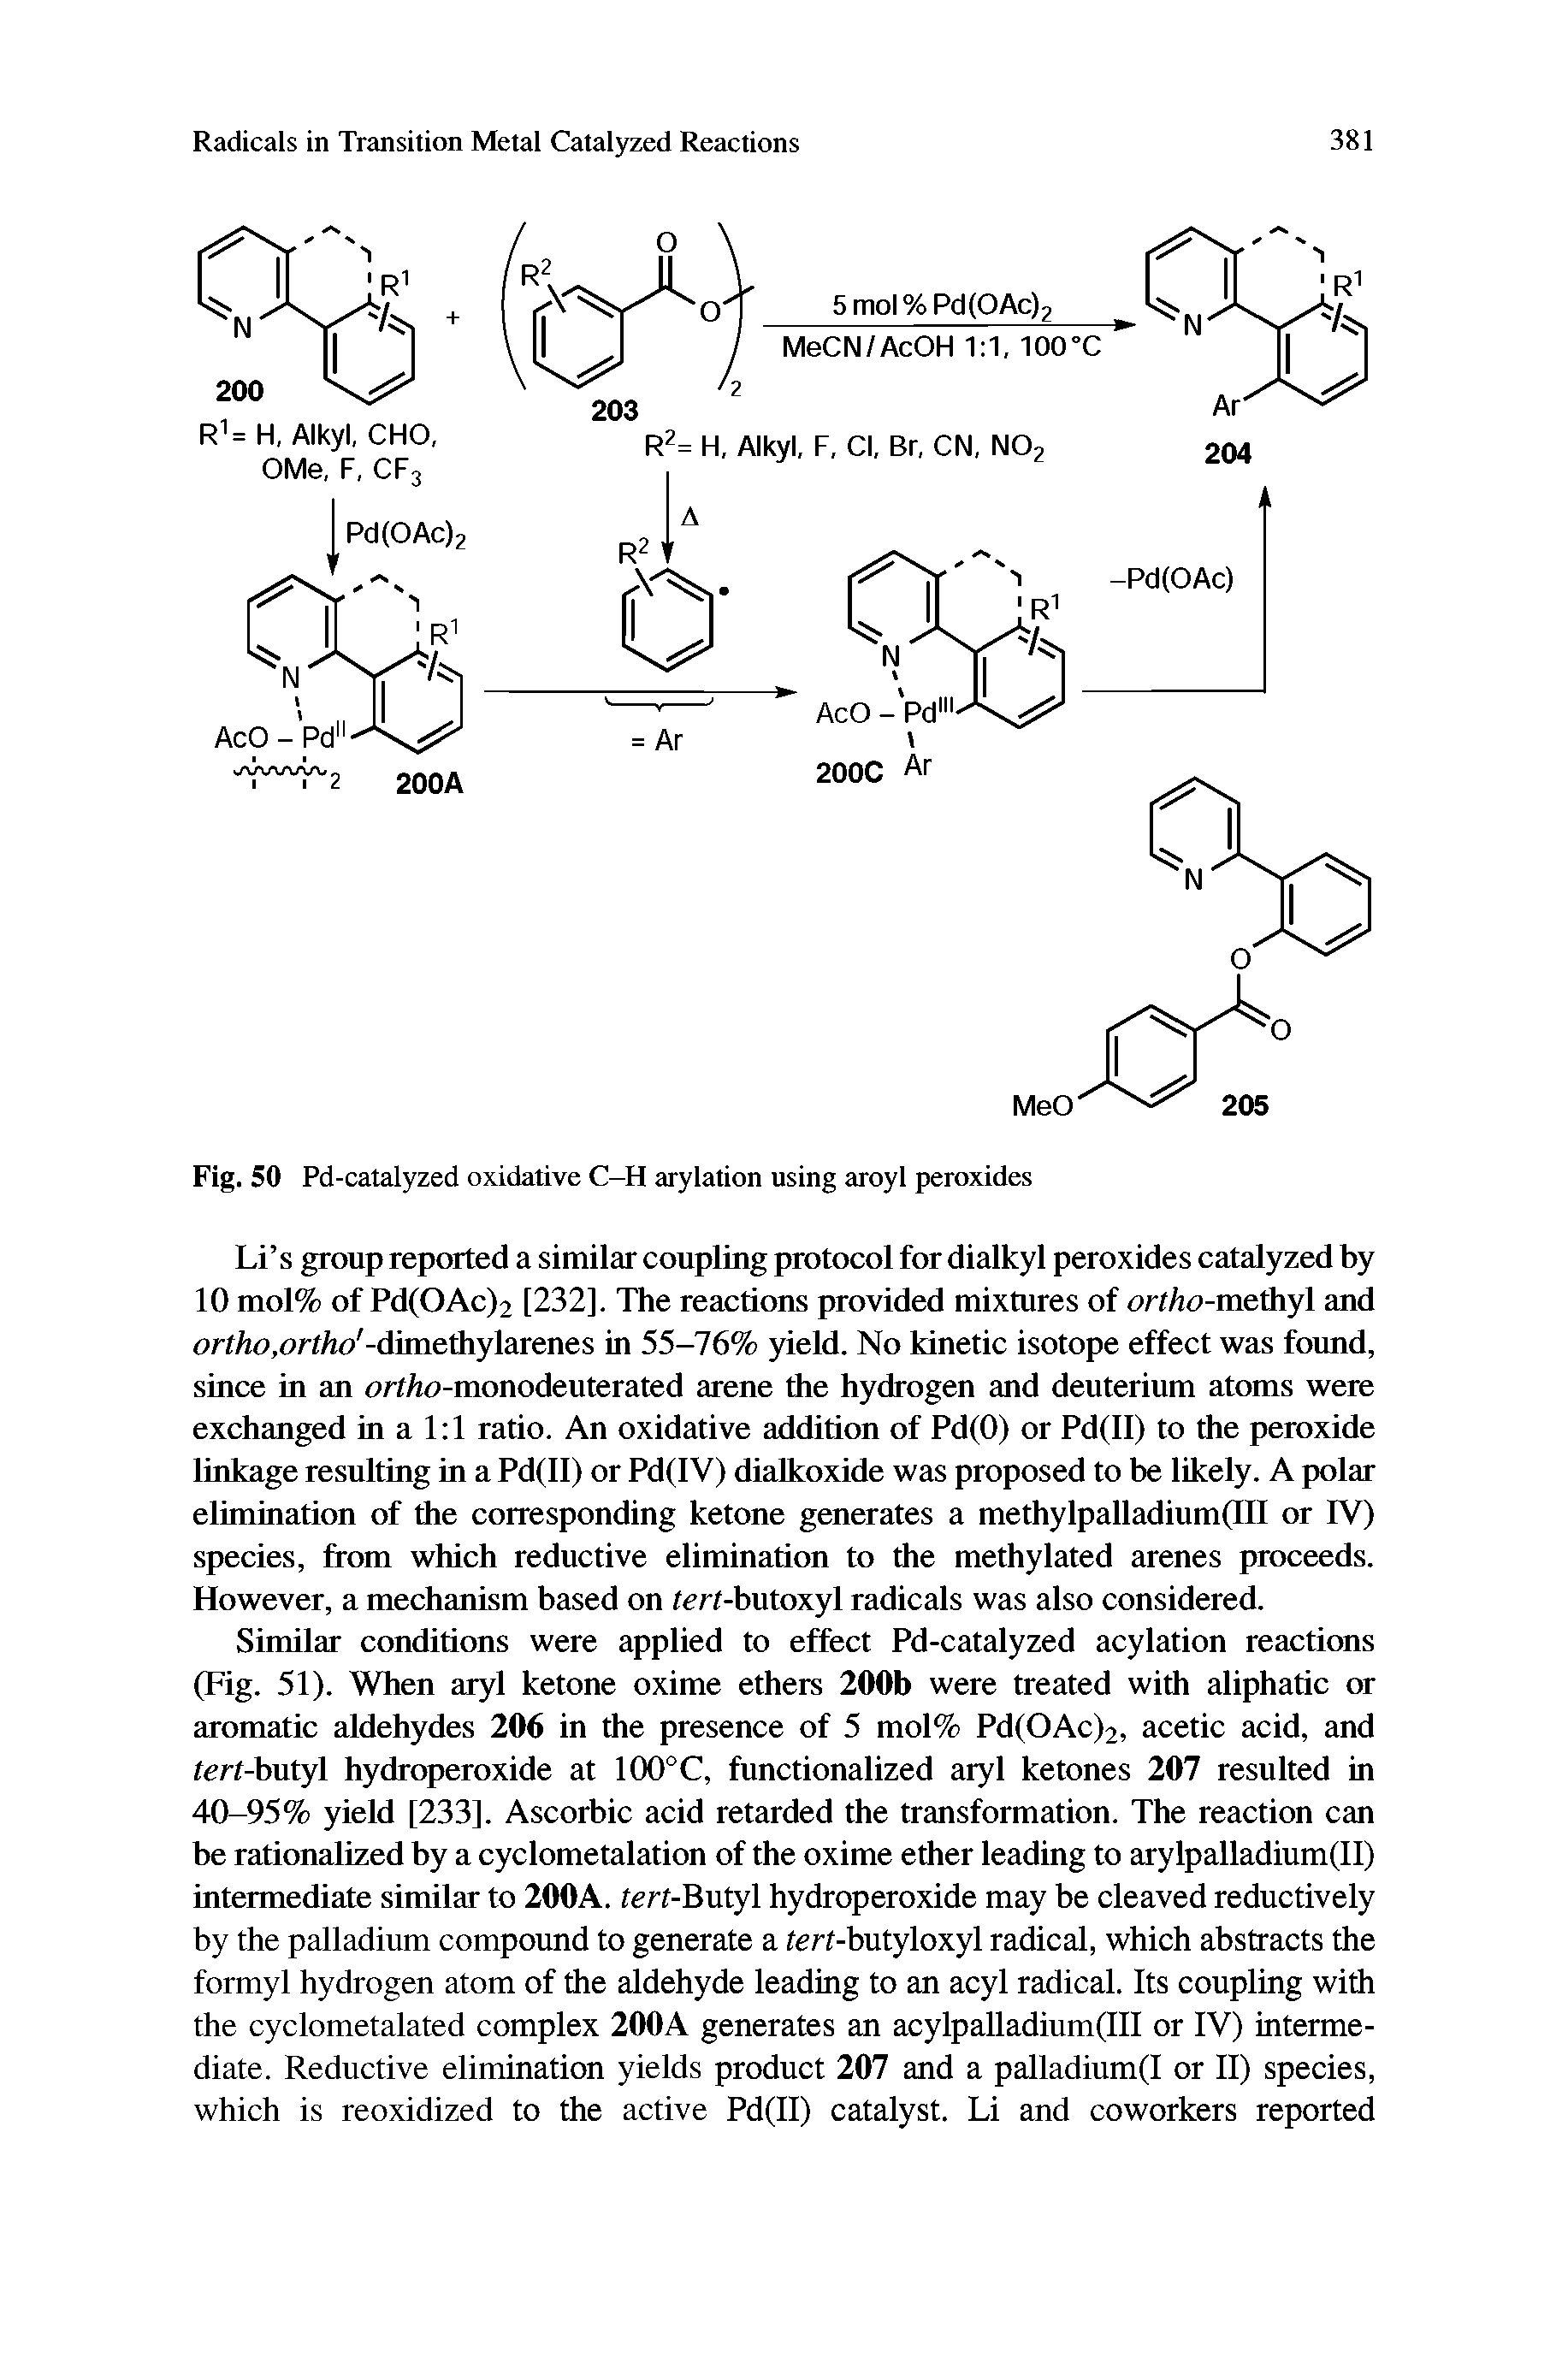 Fig. 50 Pd-catalyzed oxidative C-H arylation using aroyl peroxides...